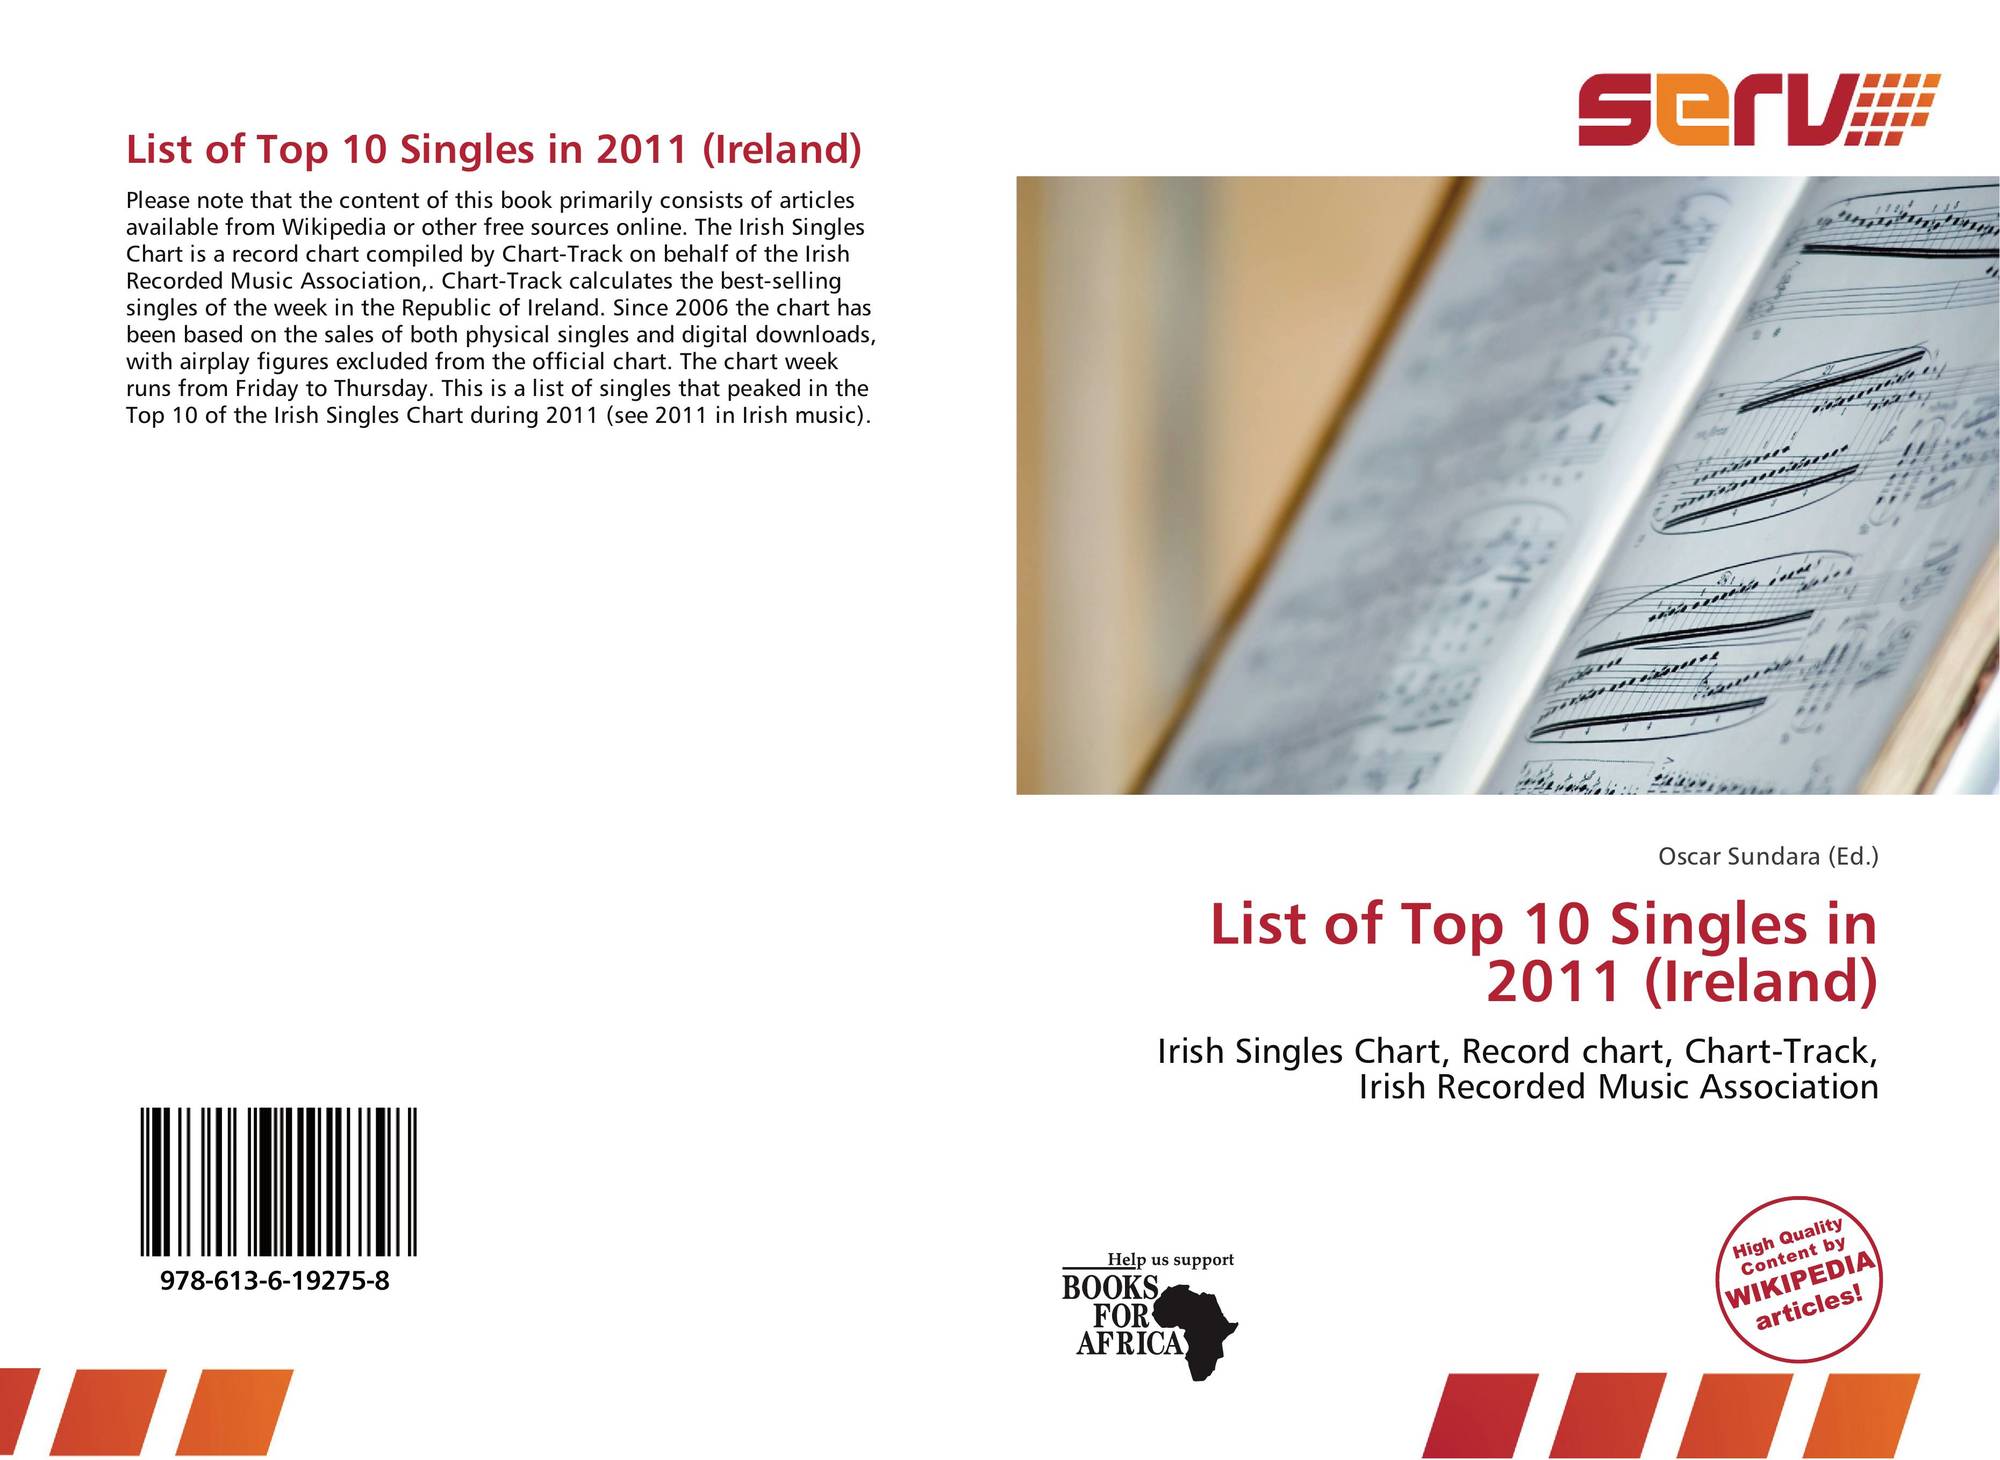 Top 10 Music Charts 2011